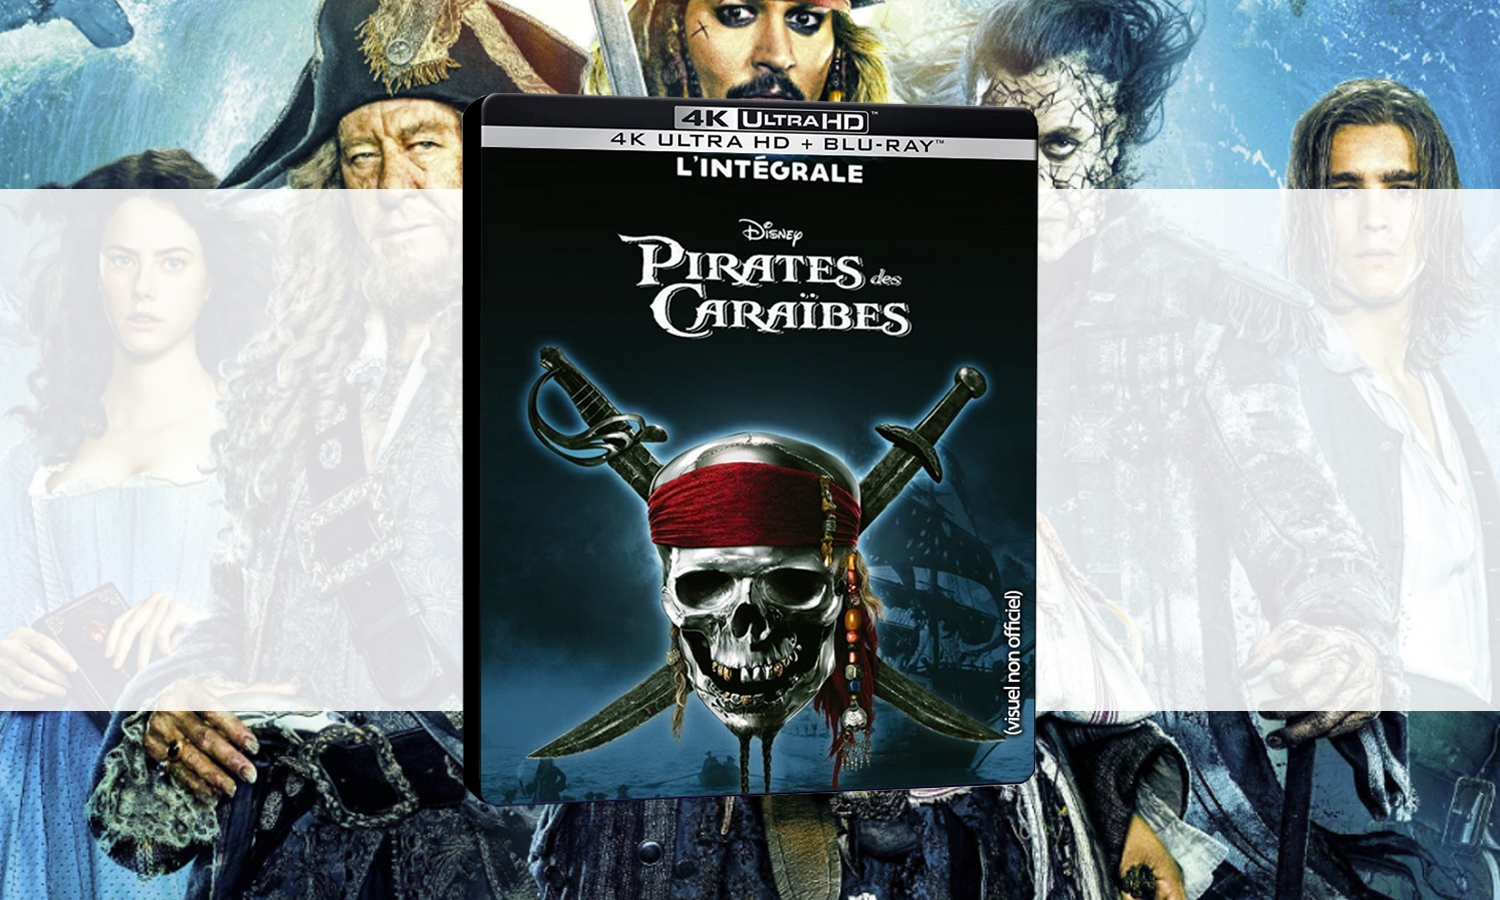 Pirates des Caraïbes integrale Blu Ray 4K Steelbook visuel slider provisoire